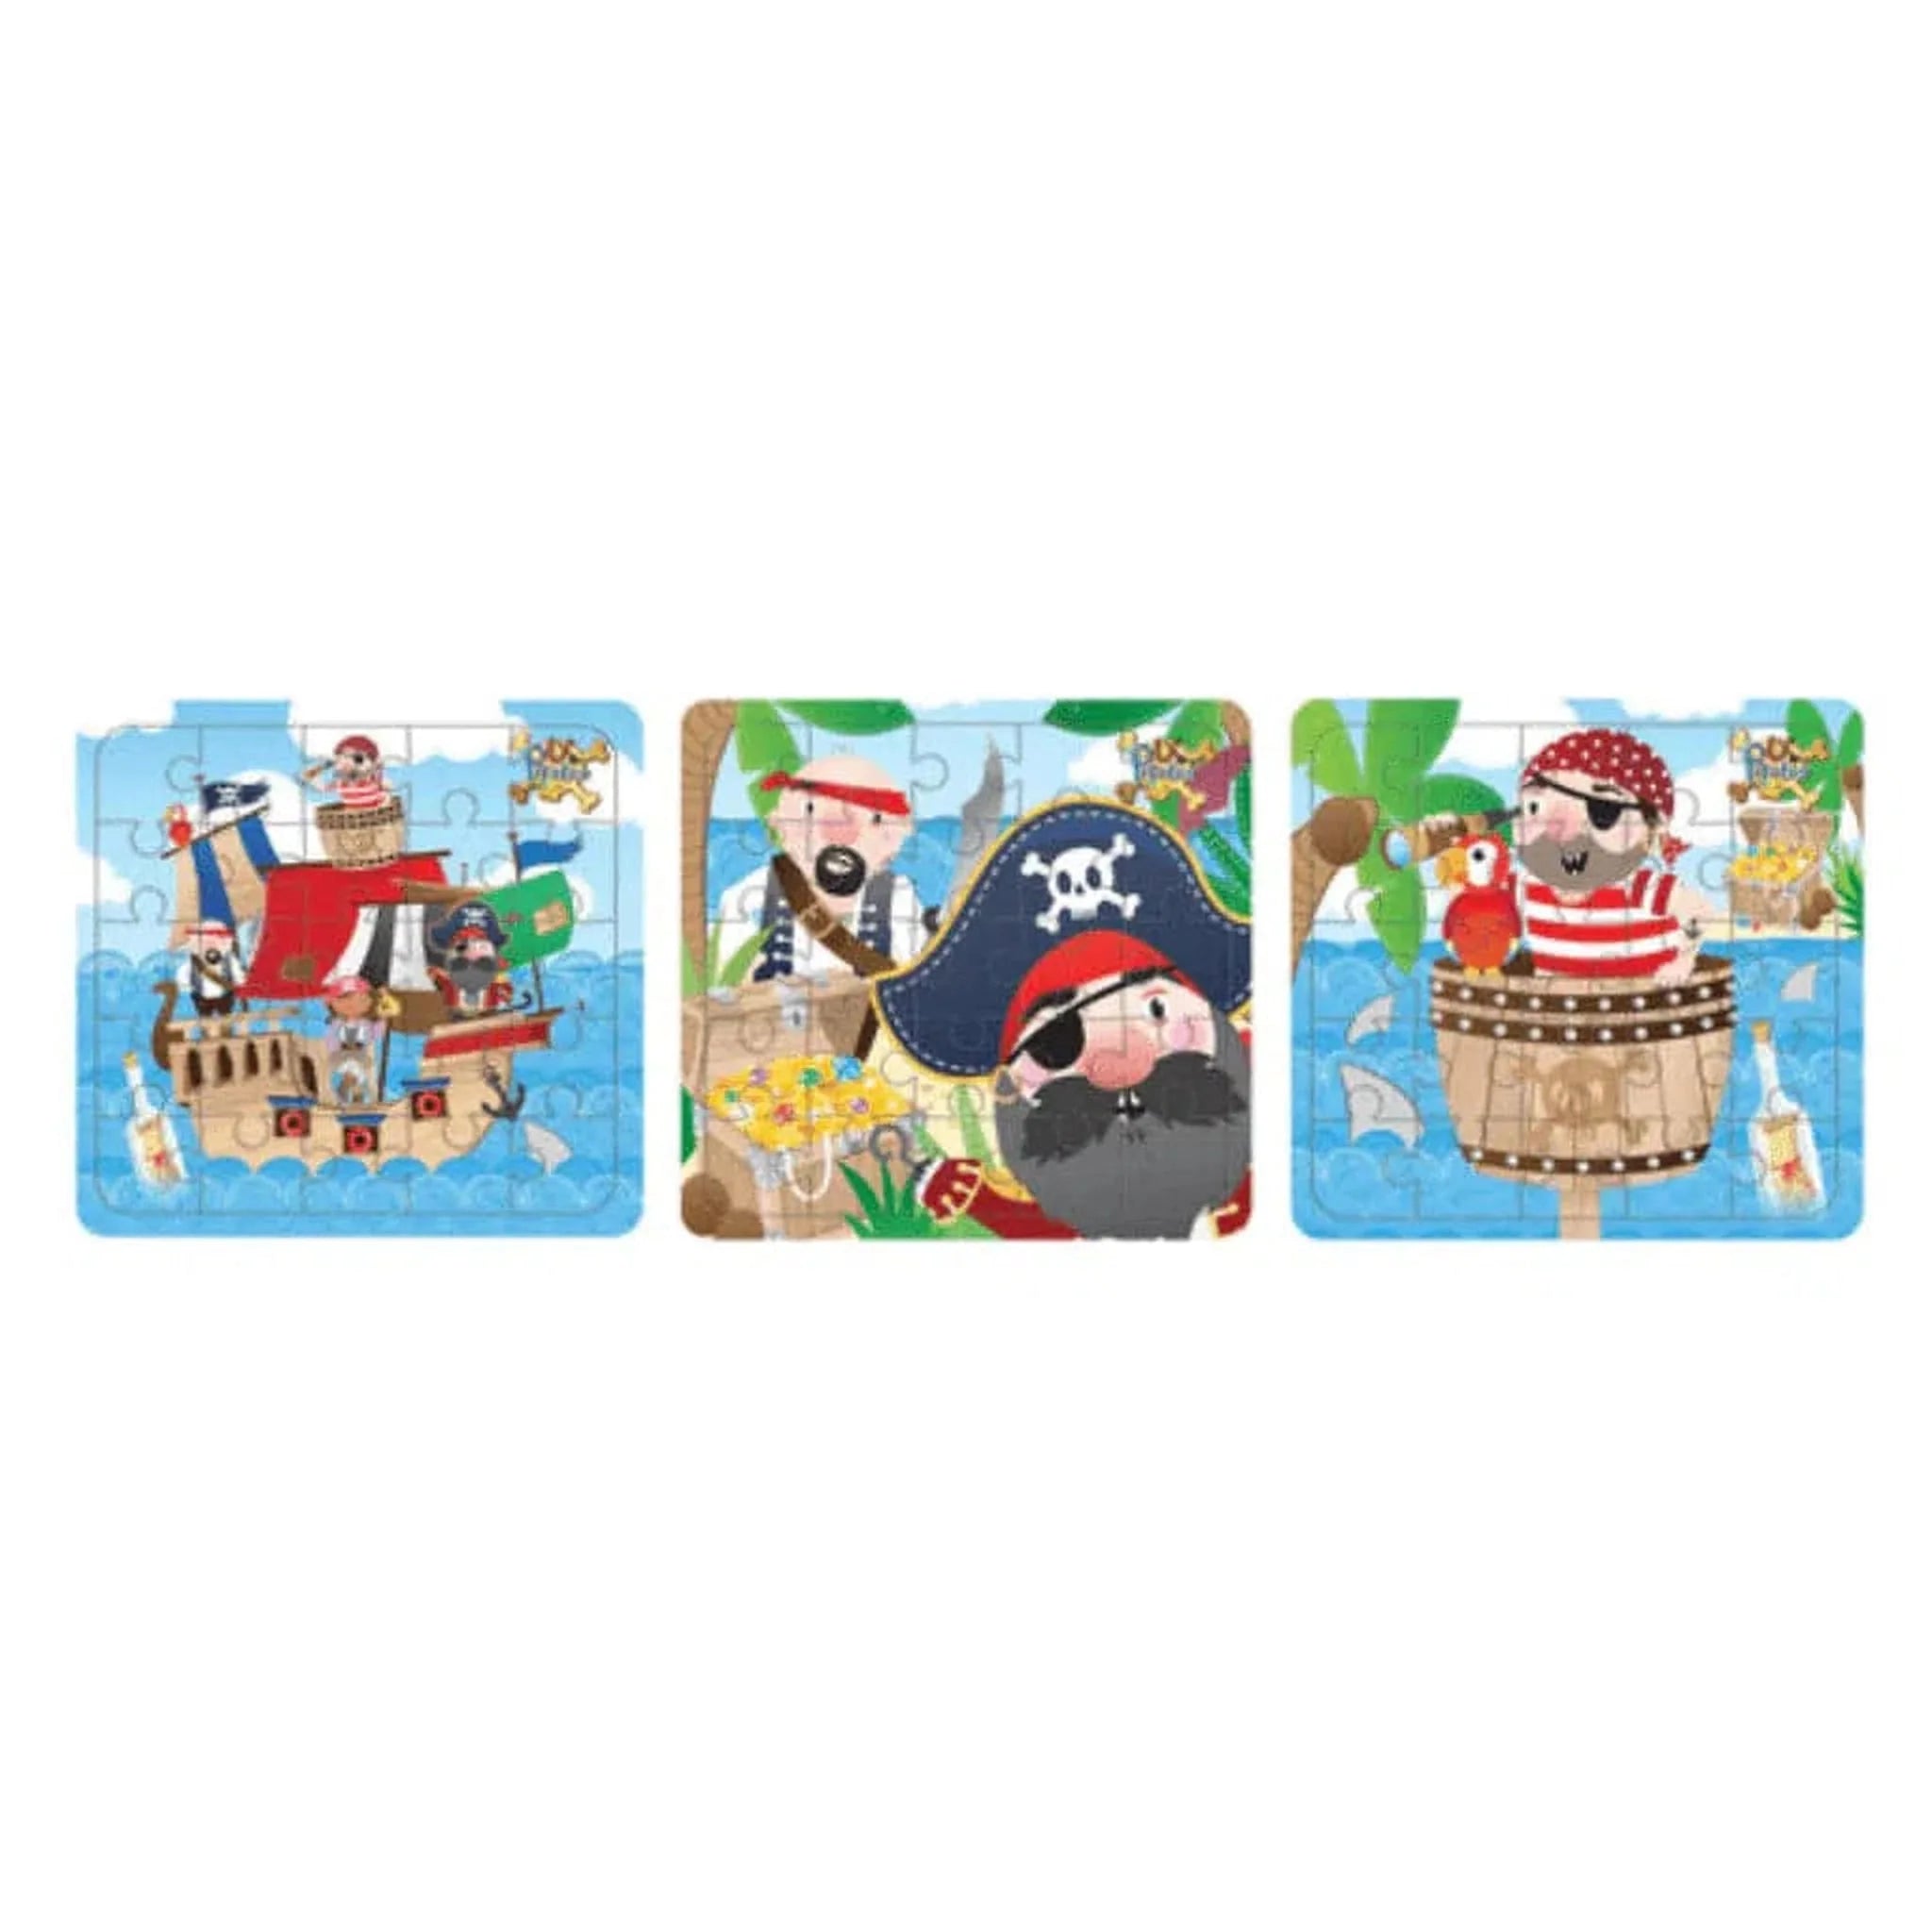 Pirate Mini Jigsaw Puzzle - Kids Party Craft